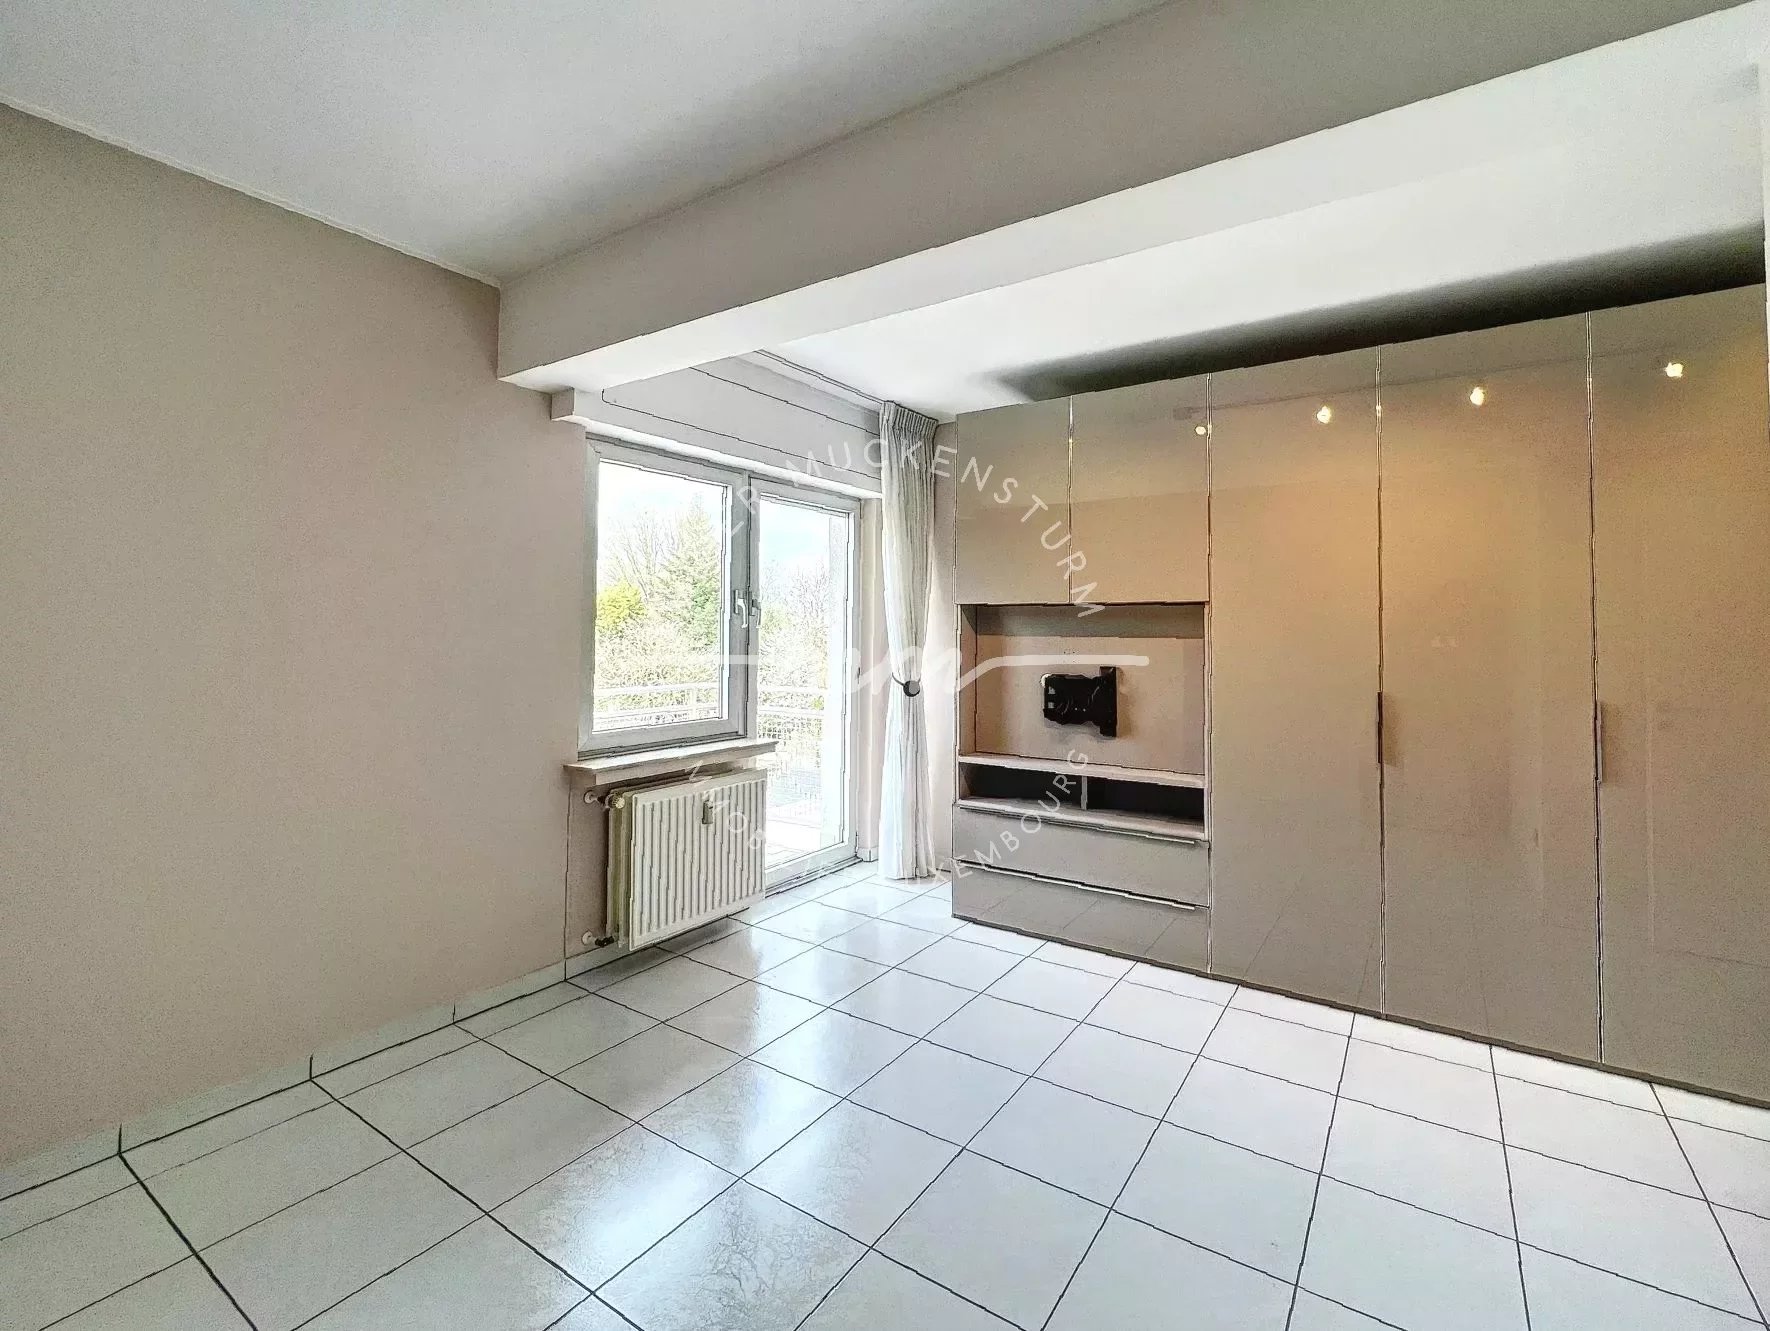 Sale Apartment - Bridel - Luxembourg